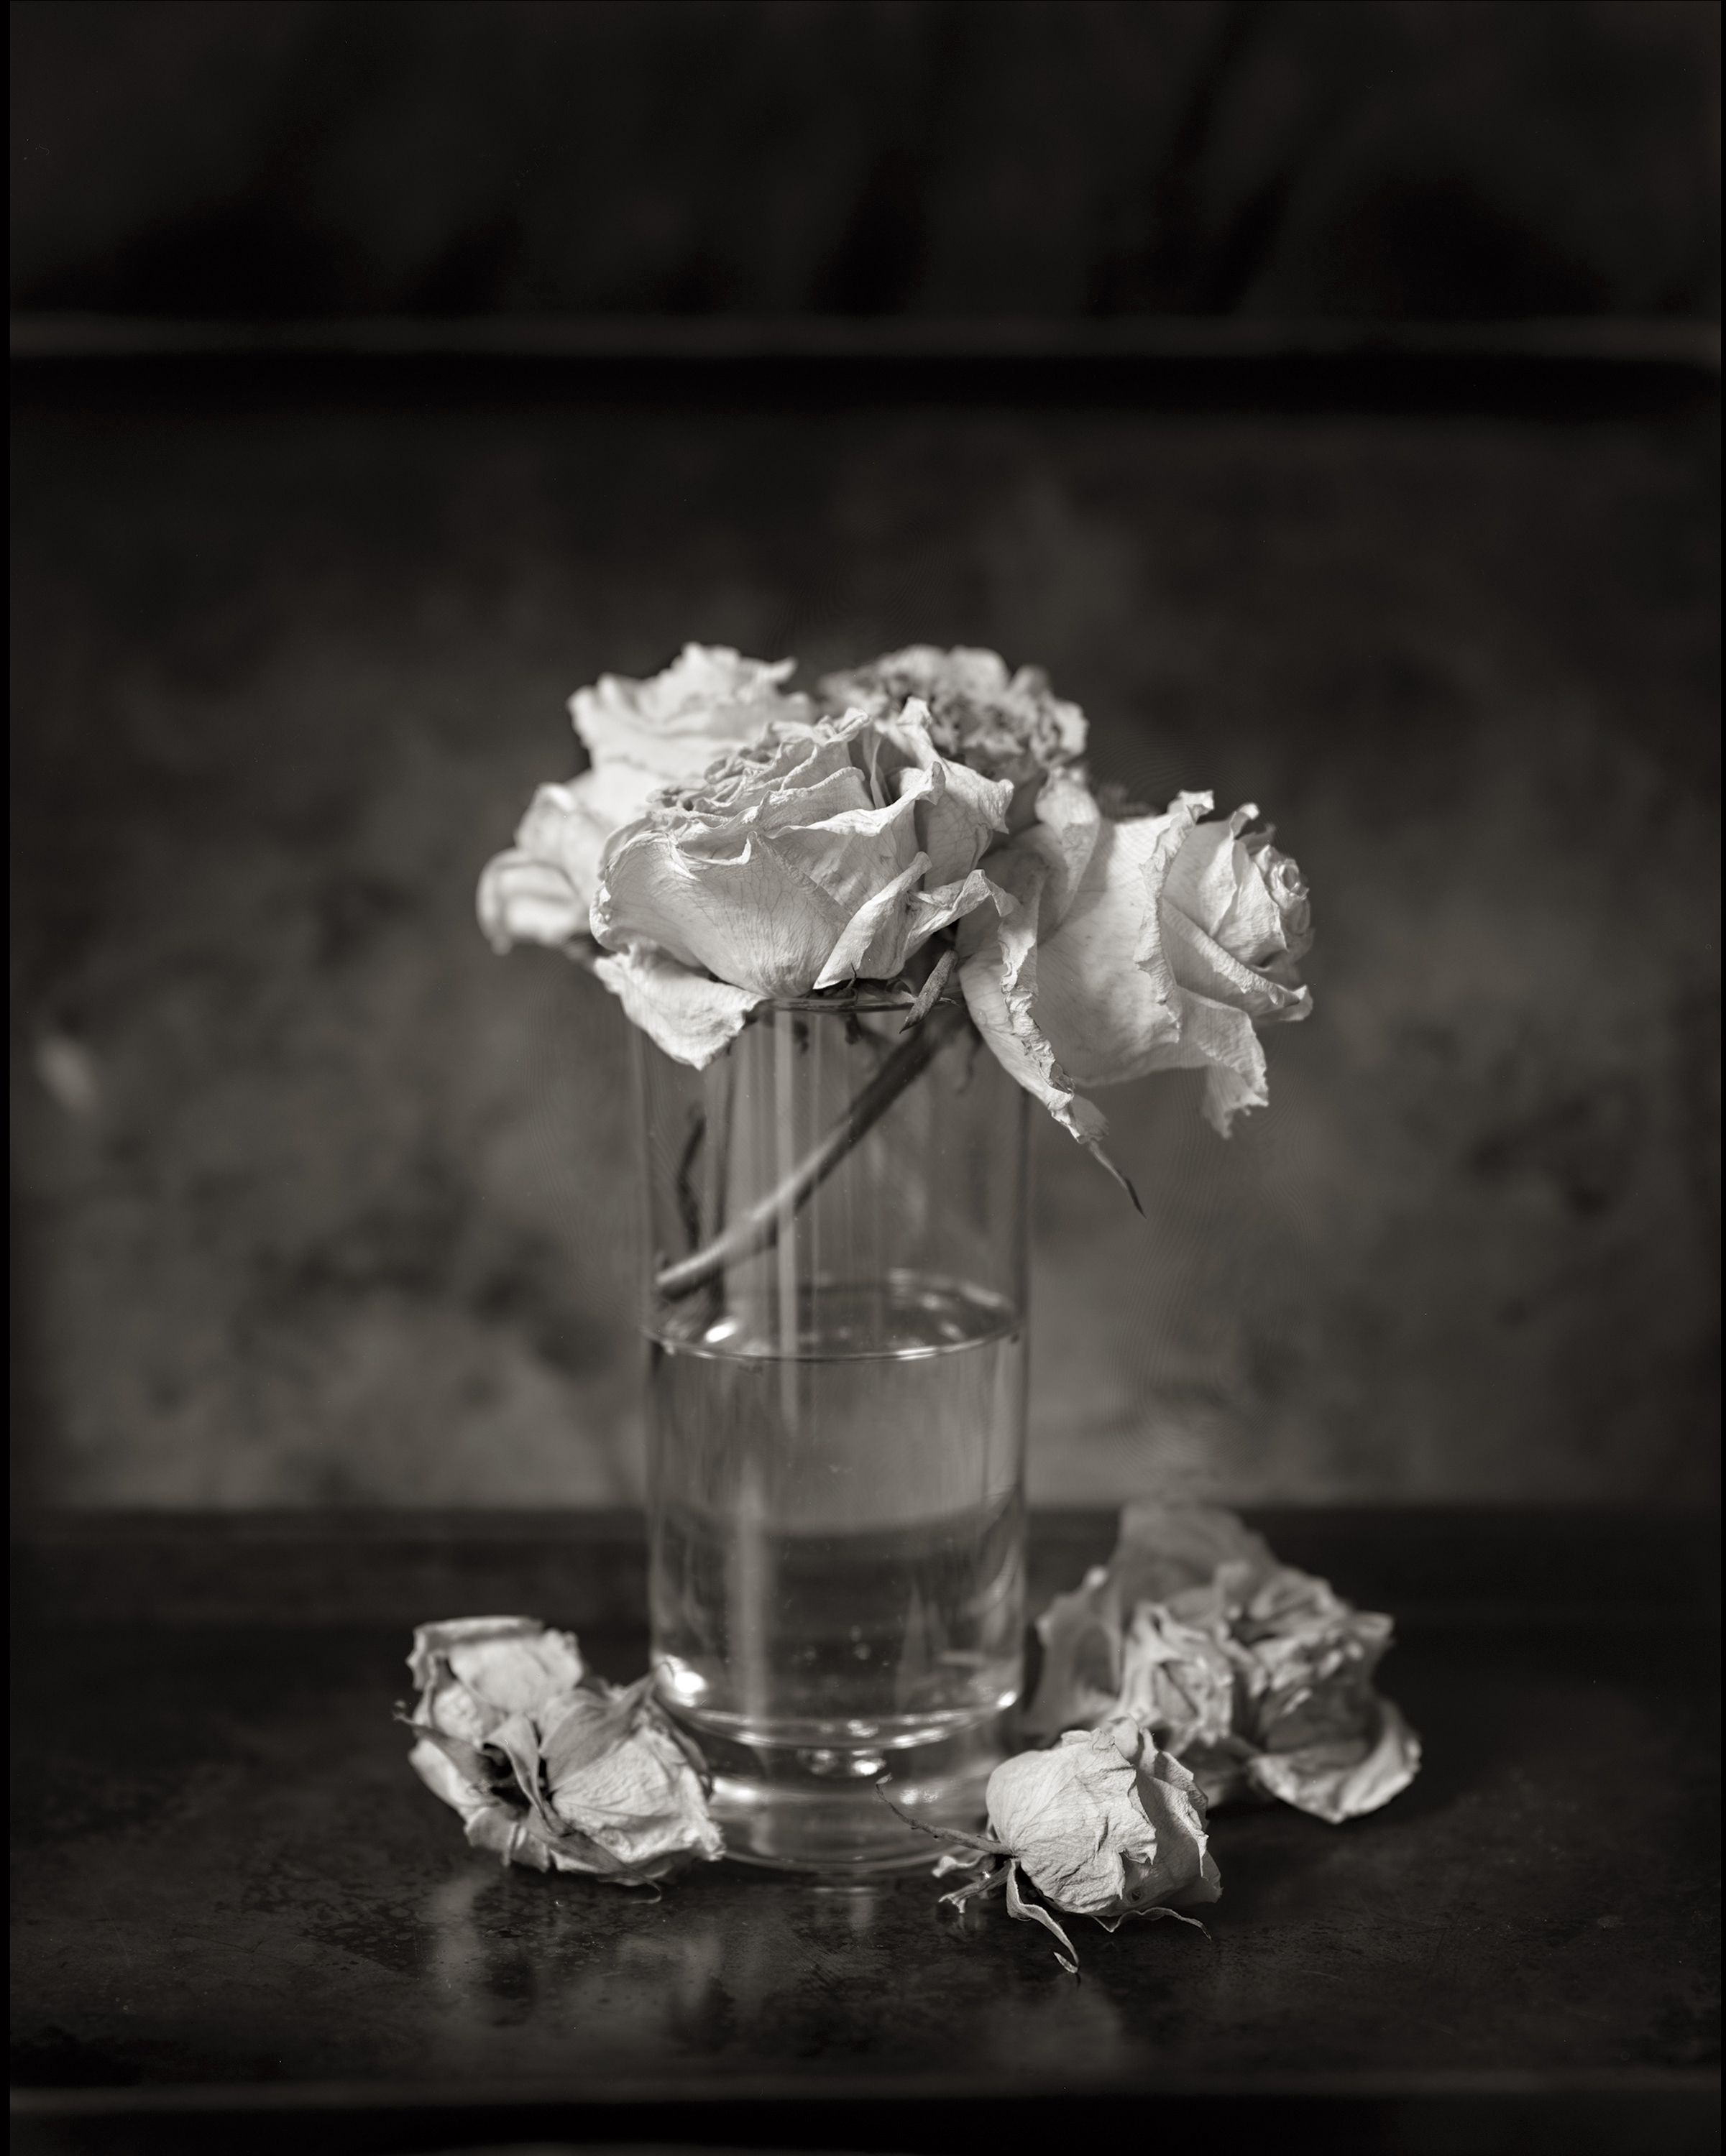  FLOWERS IN A GLASS HALF EMPTY, 2014 